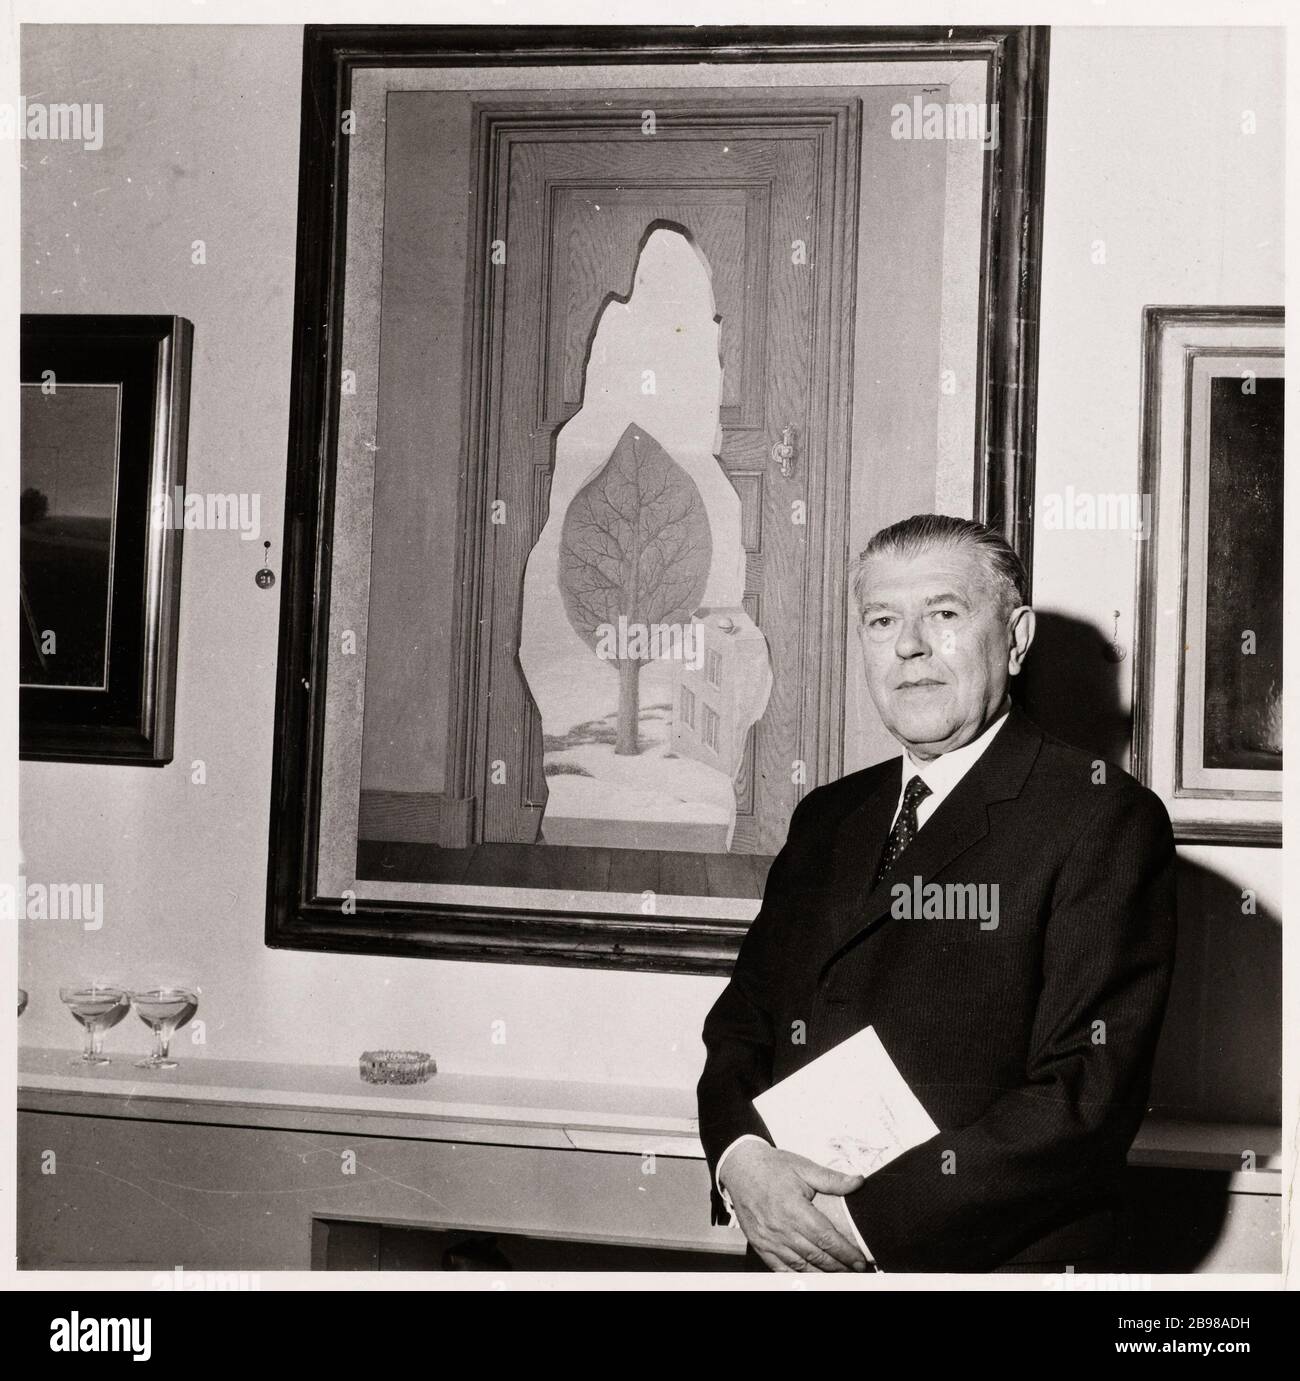 The Portrait Rene Magritte